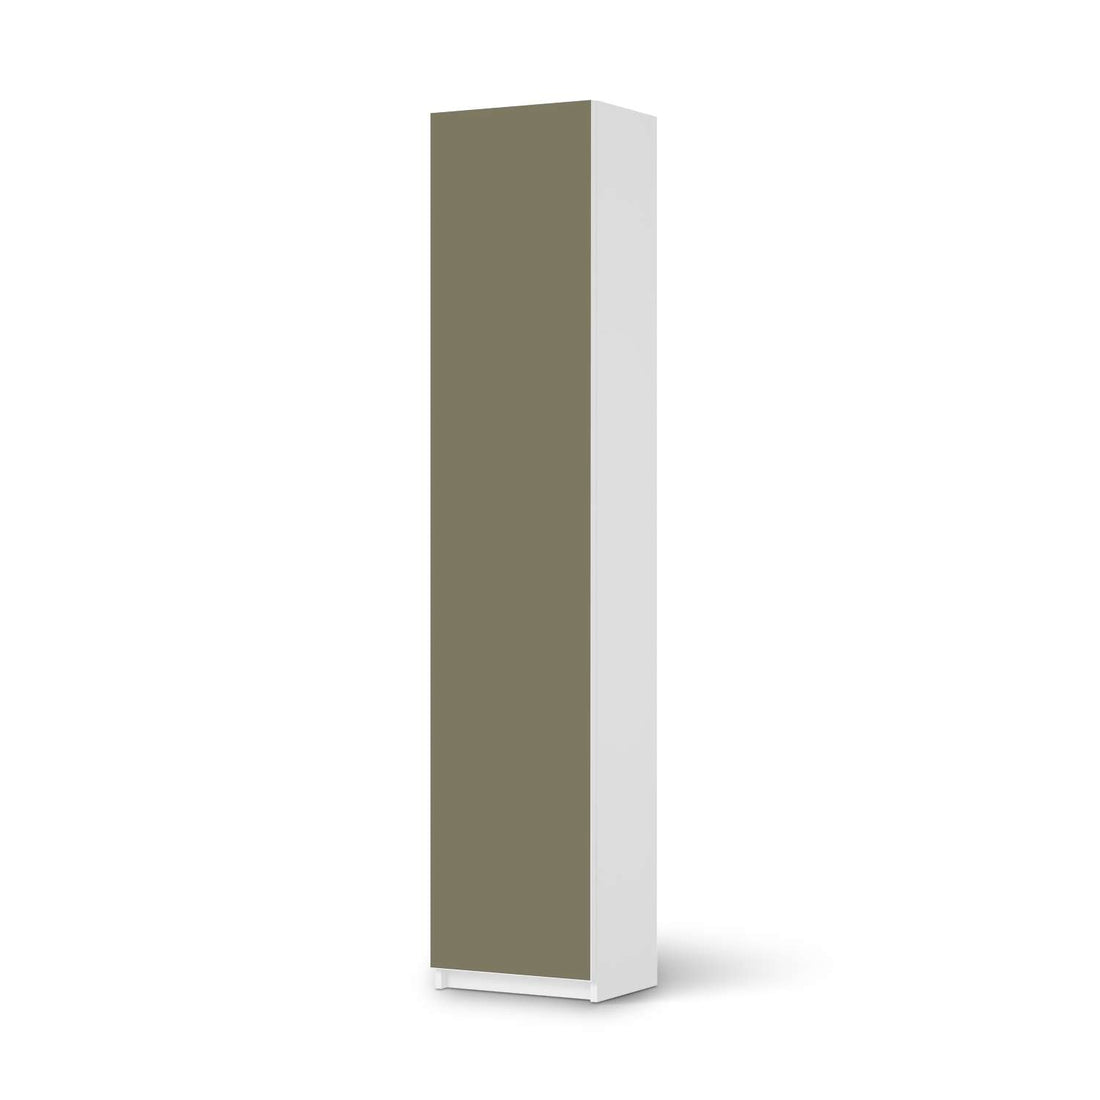 Klebefolie Braungrau Light - IKEA Pax Schrank 236 cm Höhe - 1 Tür - weiss